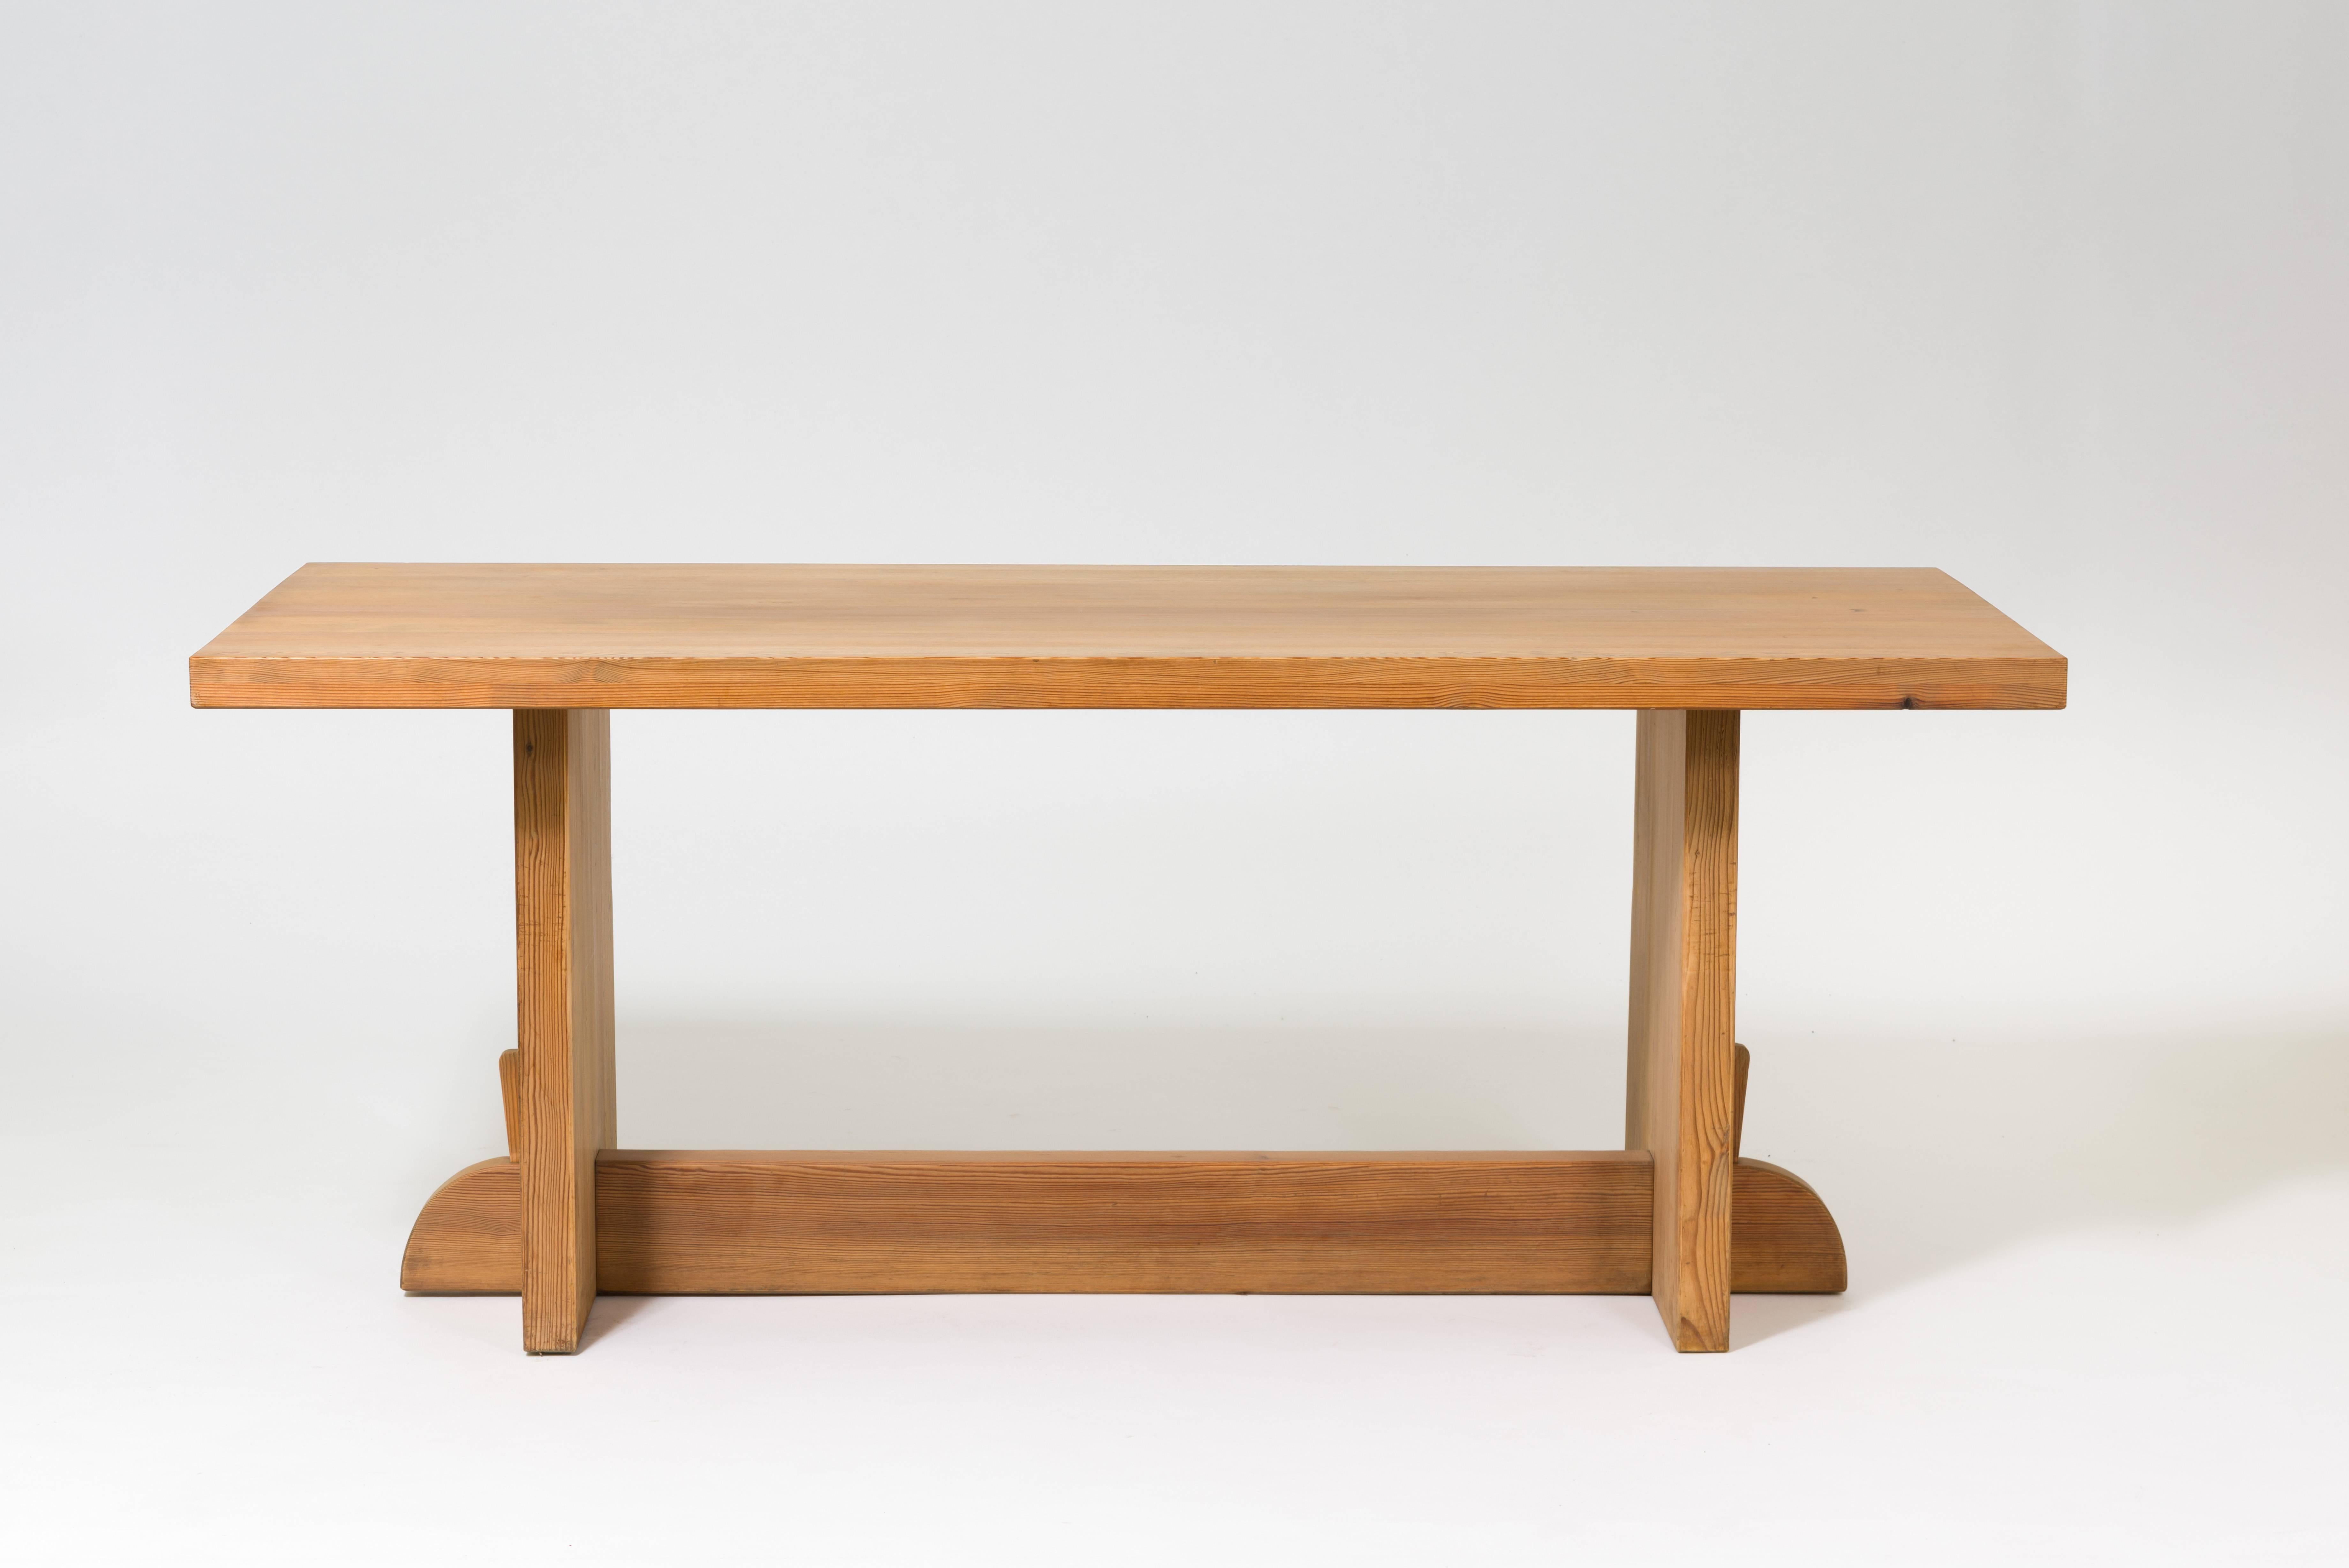 Axel Einar Hjorth (1888-1959).
‘Lovö’ dining table,
circa 1930.
Manufactured by Nordiska Kompaniet.
Solid pine.

 